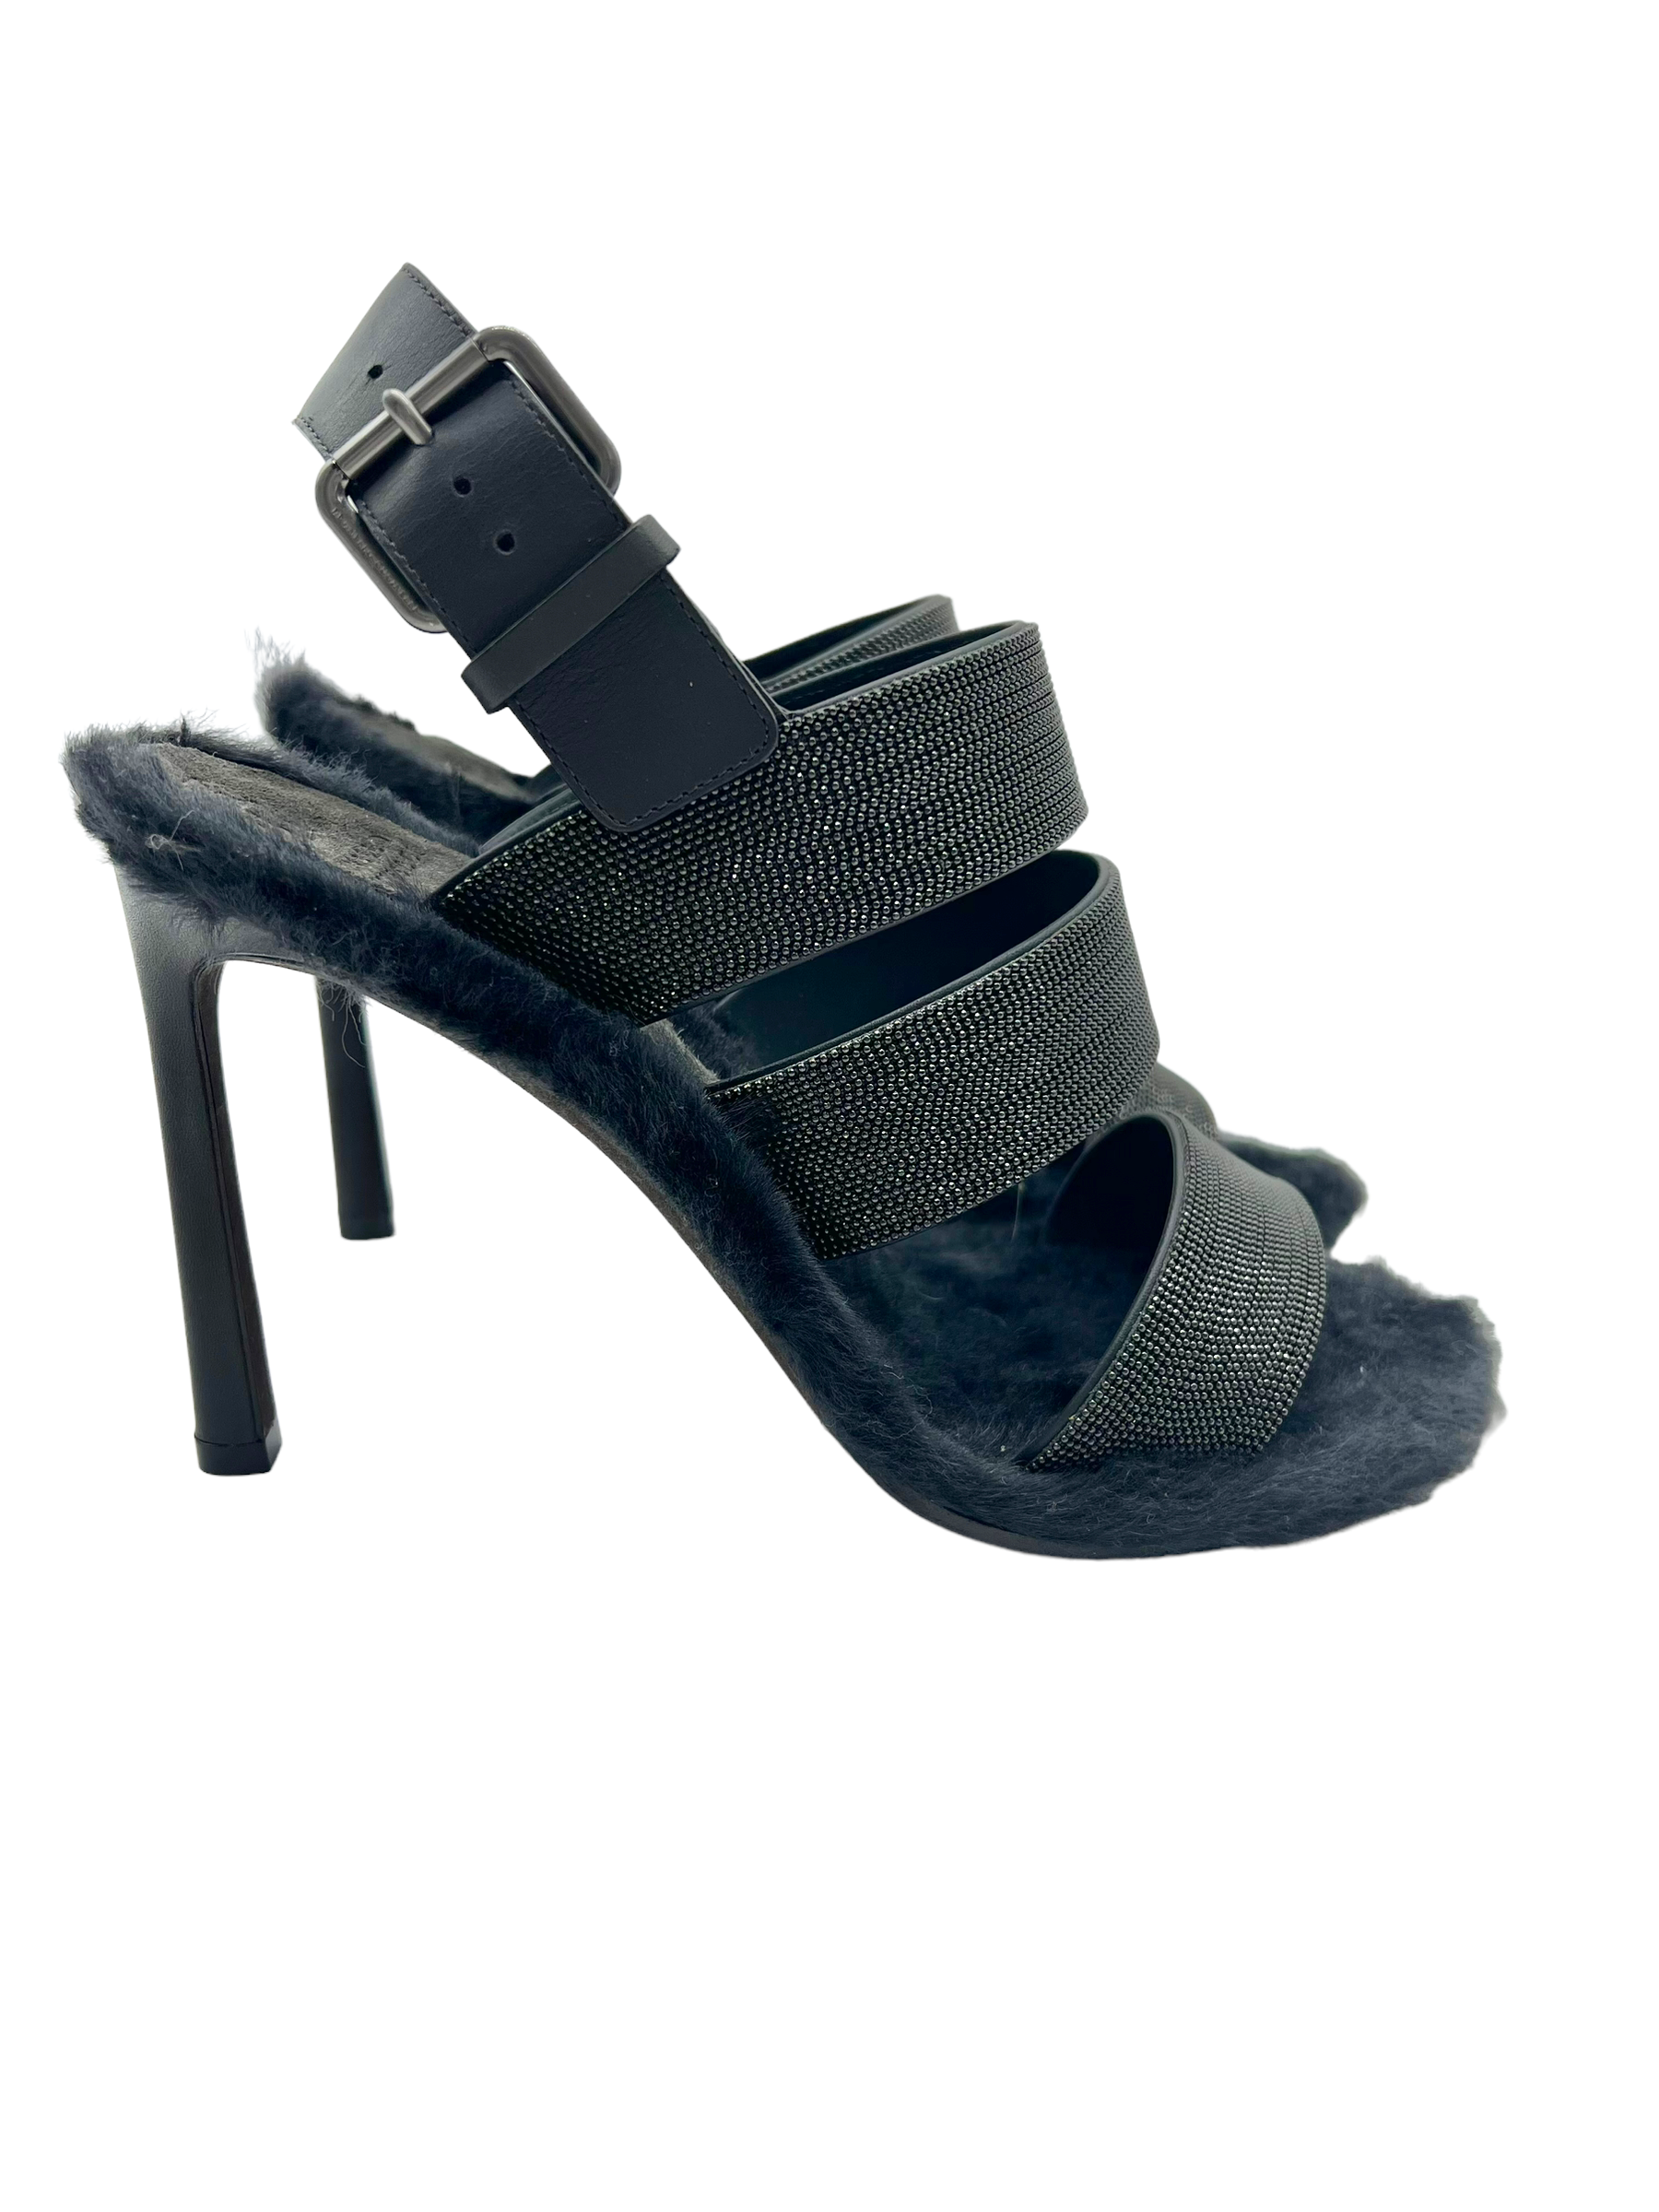 Shoe Republic LA Women's FUR Heels Sandals in Gray | Heels, High heels,  Cute shoes